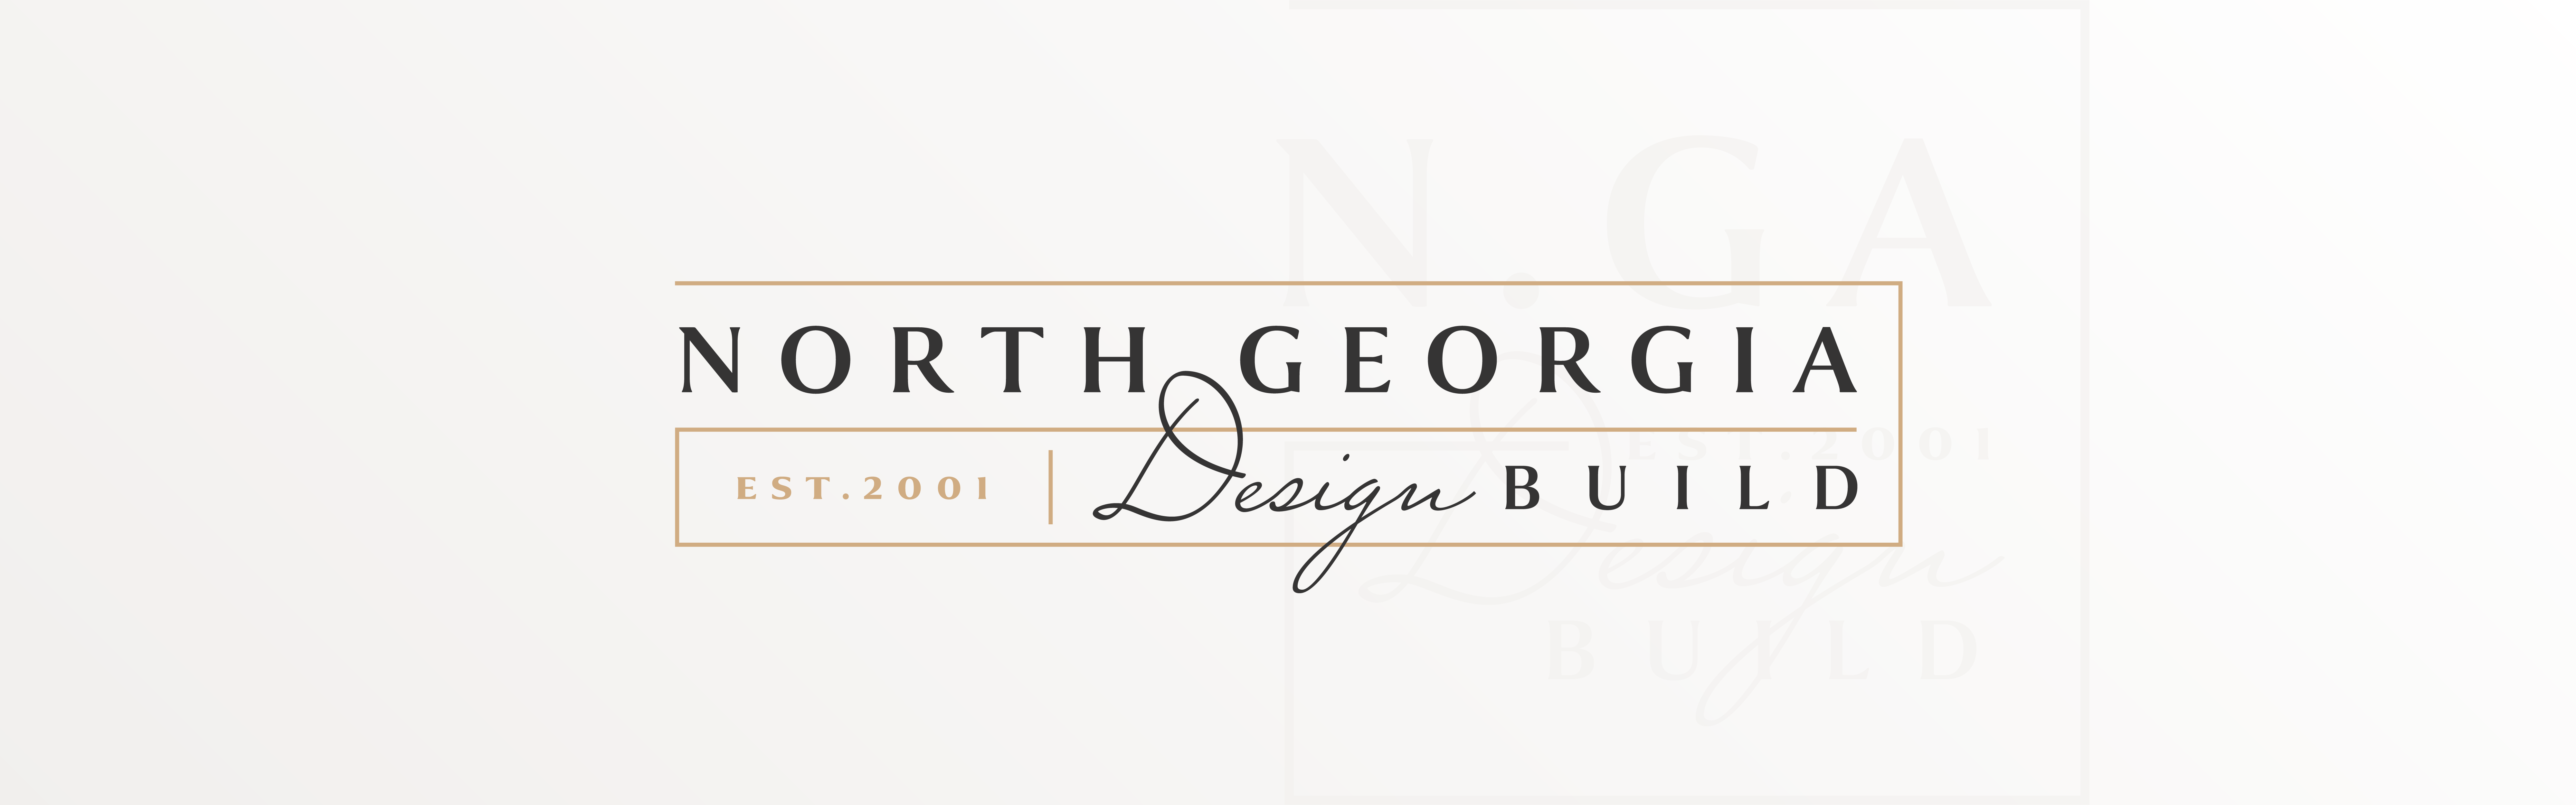 North Georgia Design Build white logo design